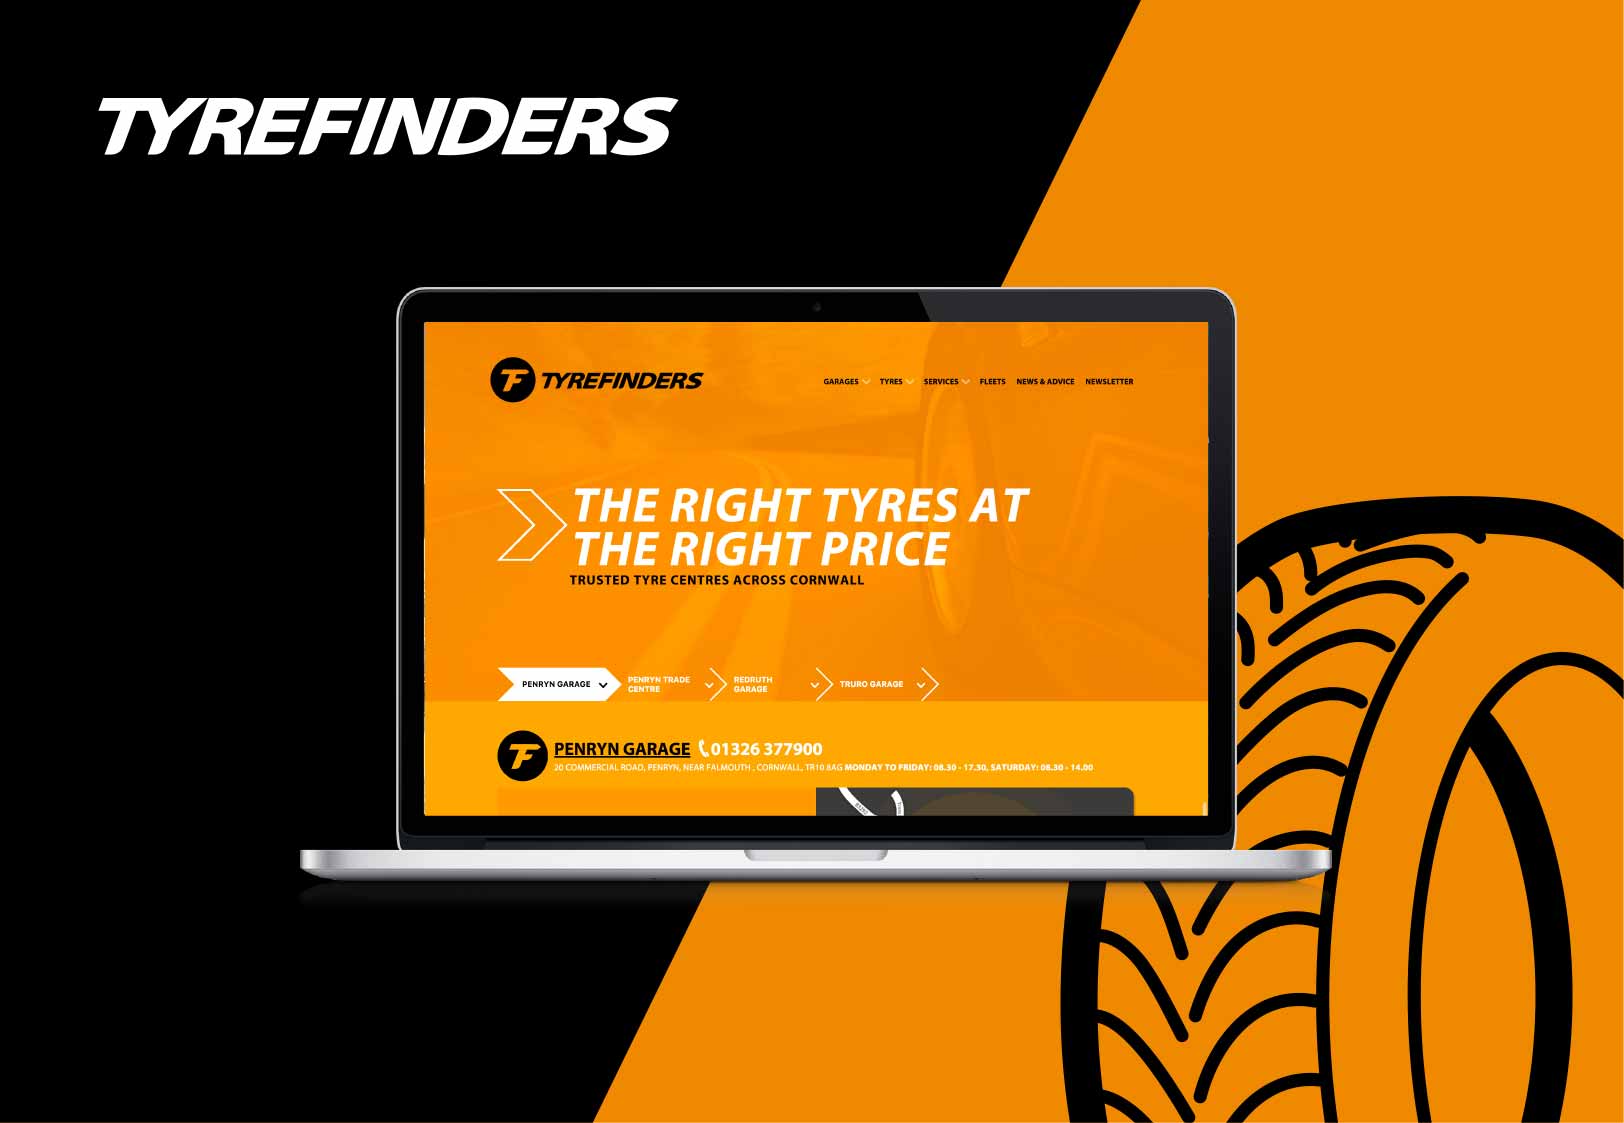 TyreFinders graphic with website in laptop screen